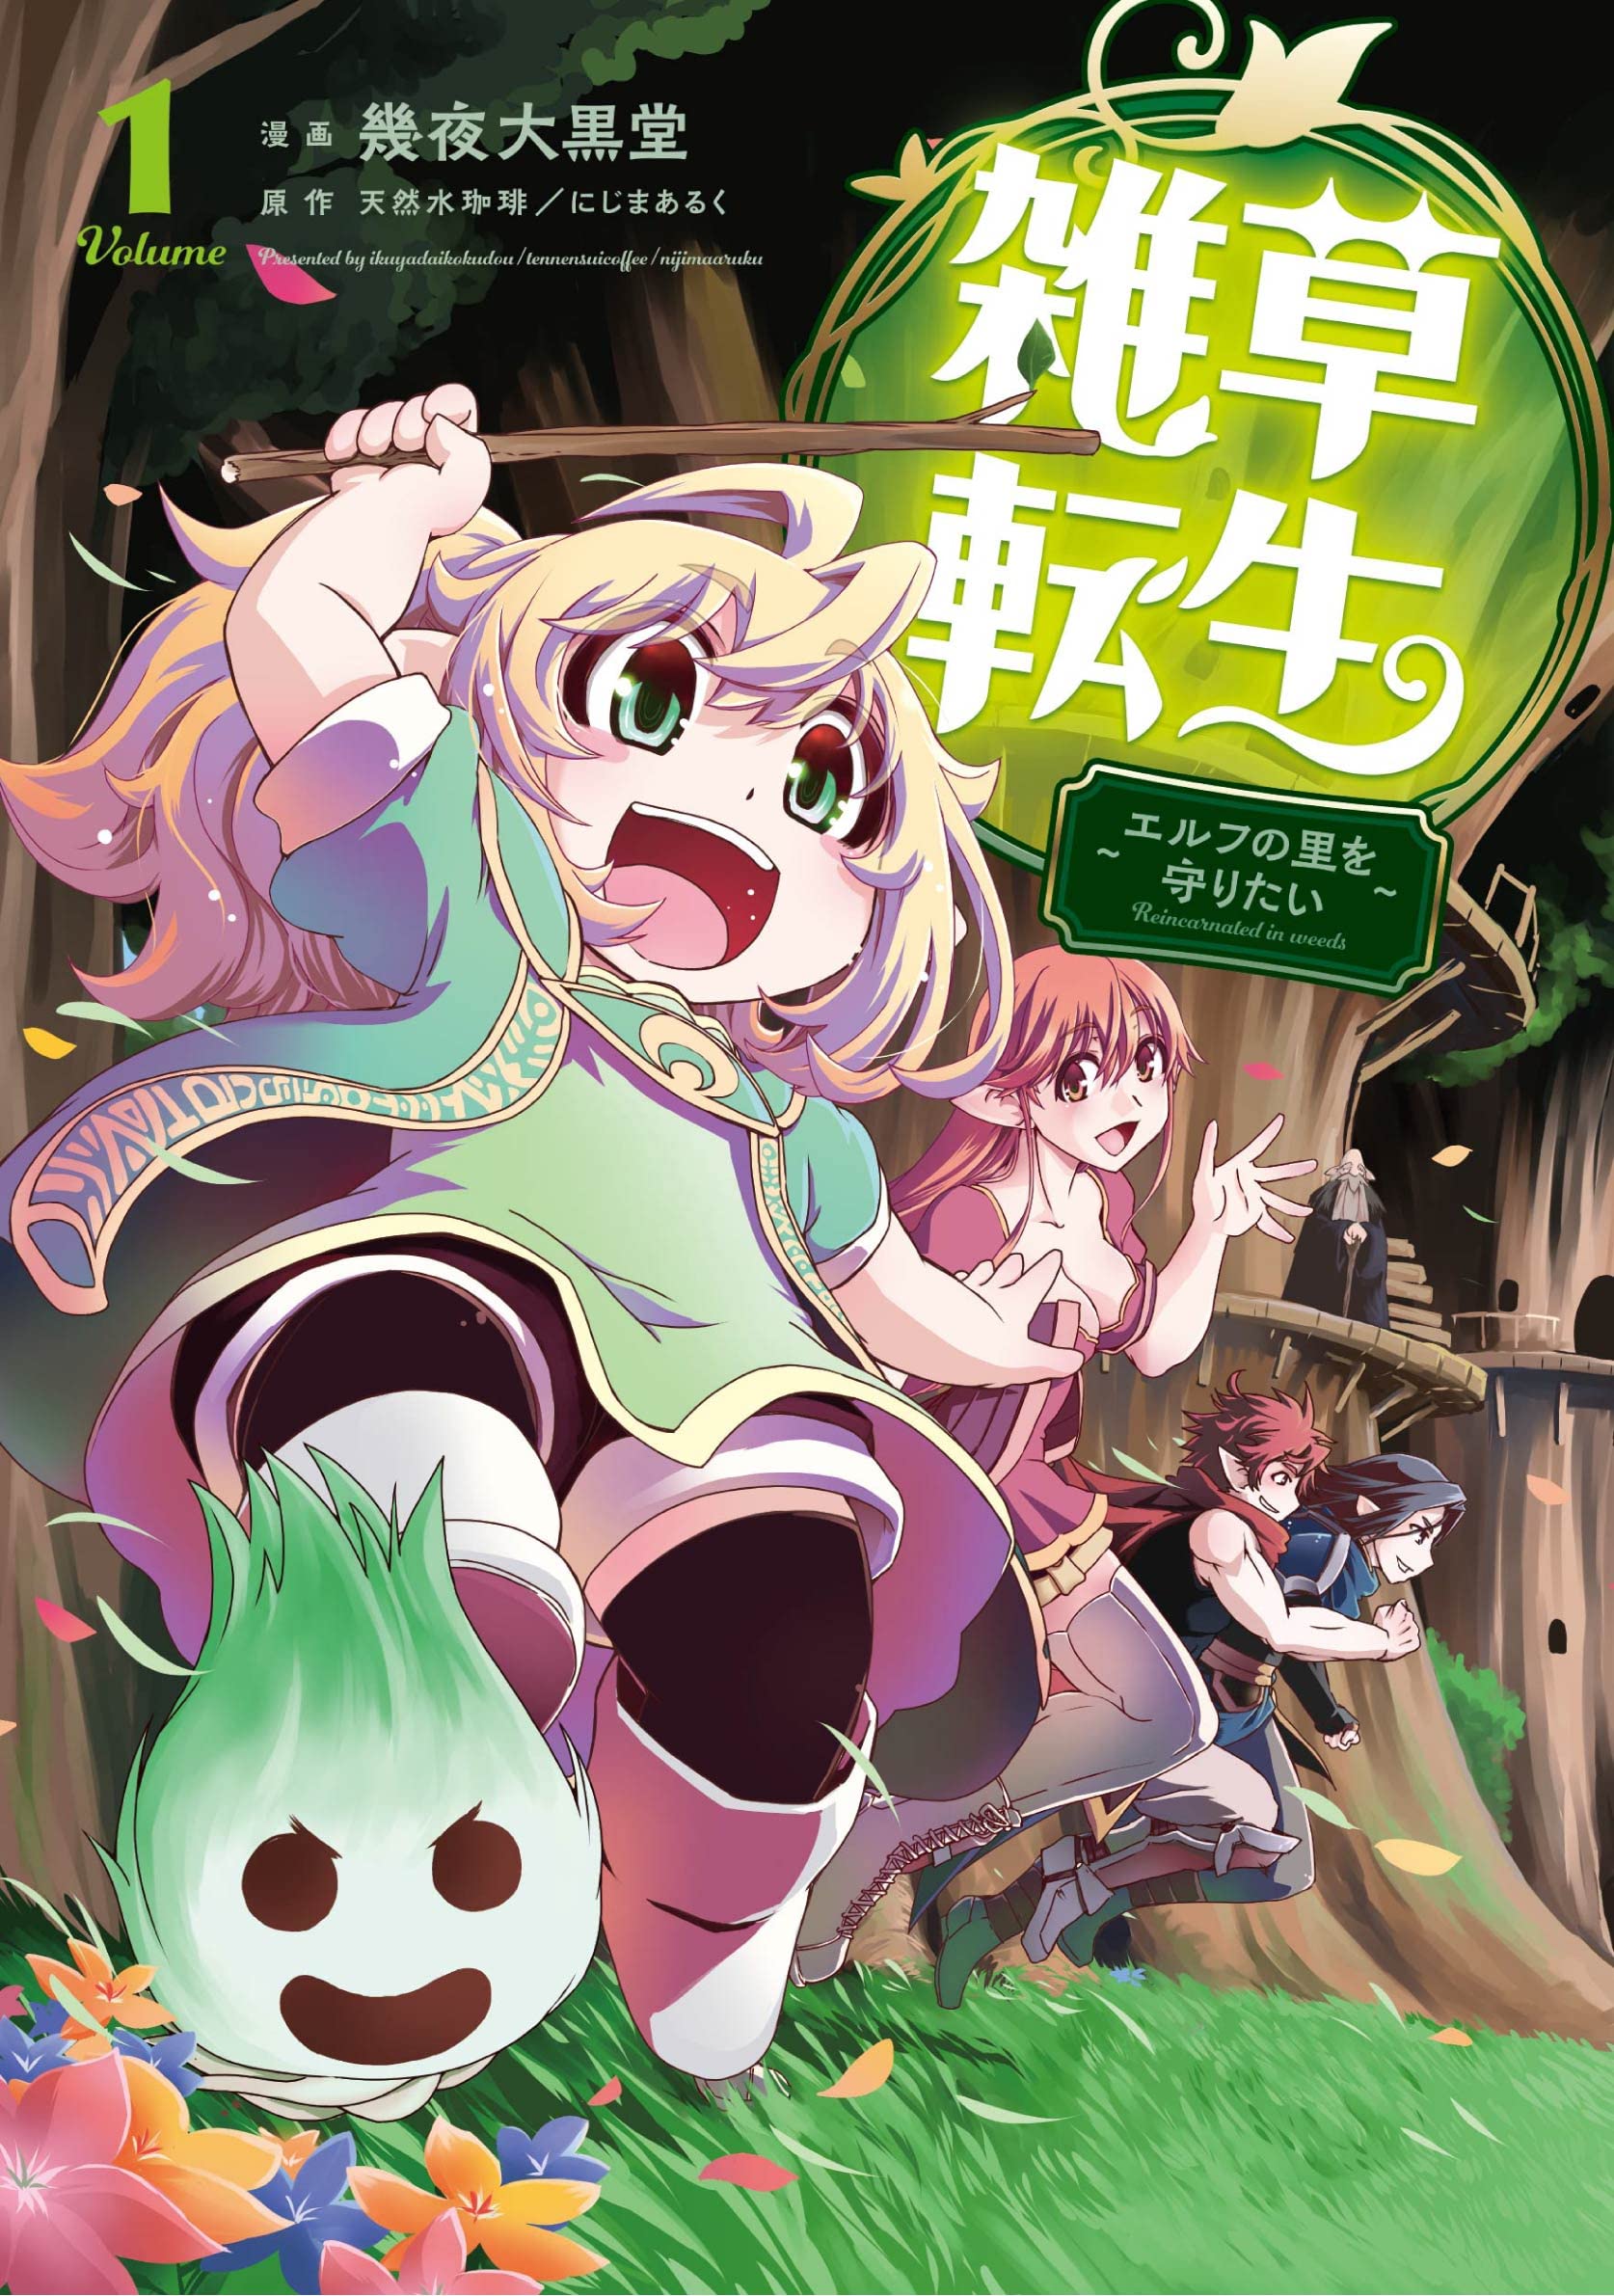 Japanese Manga Comic Book Oishii Elf Isekai Elf wa Conveni Onigiri de 1-4  set